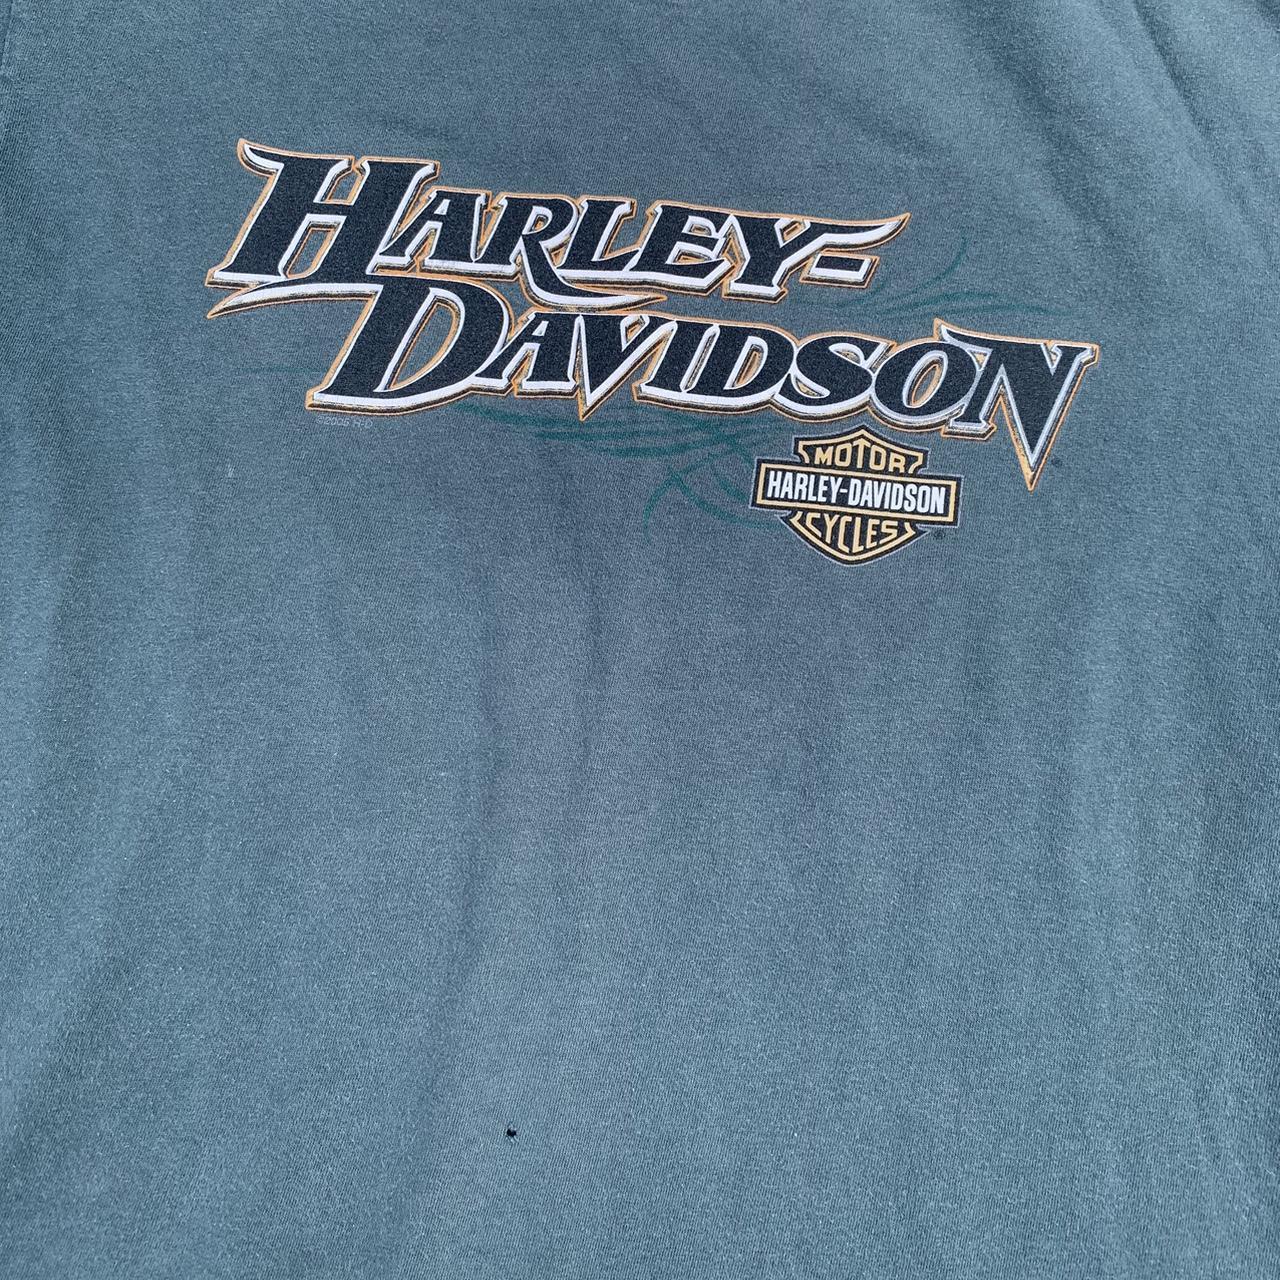 2005 Harley Davidson Myrtle Beach South Carolina... - Depop